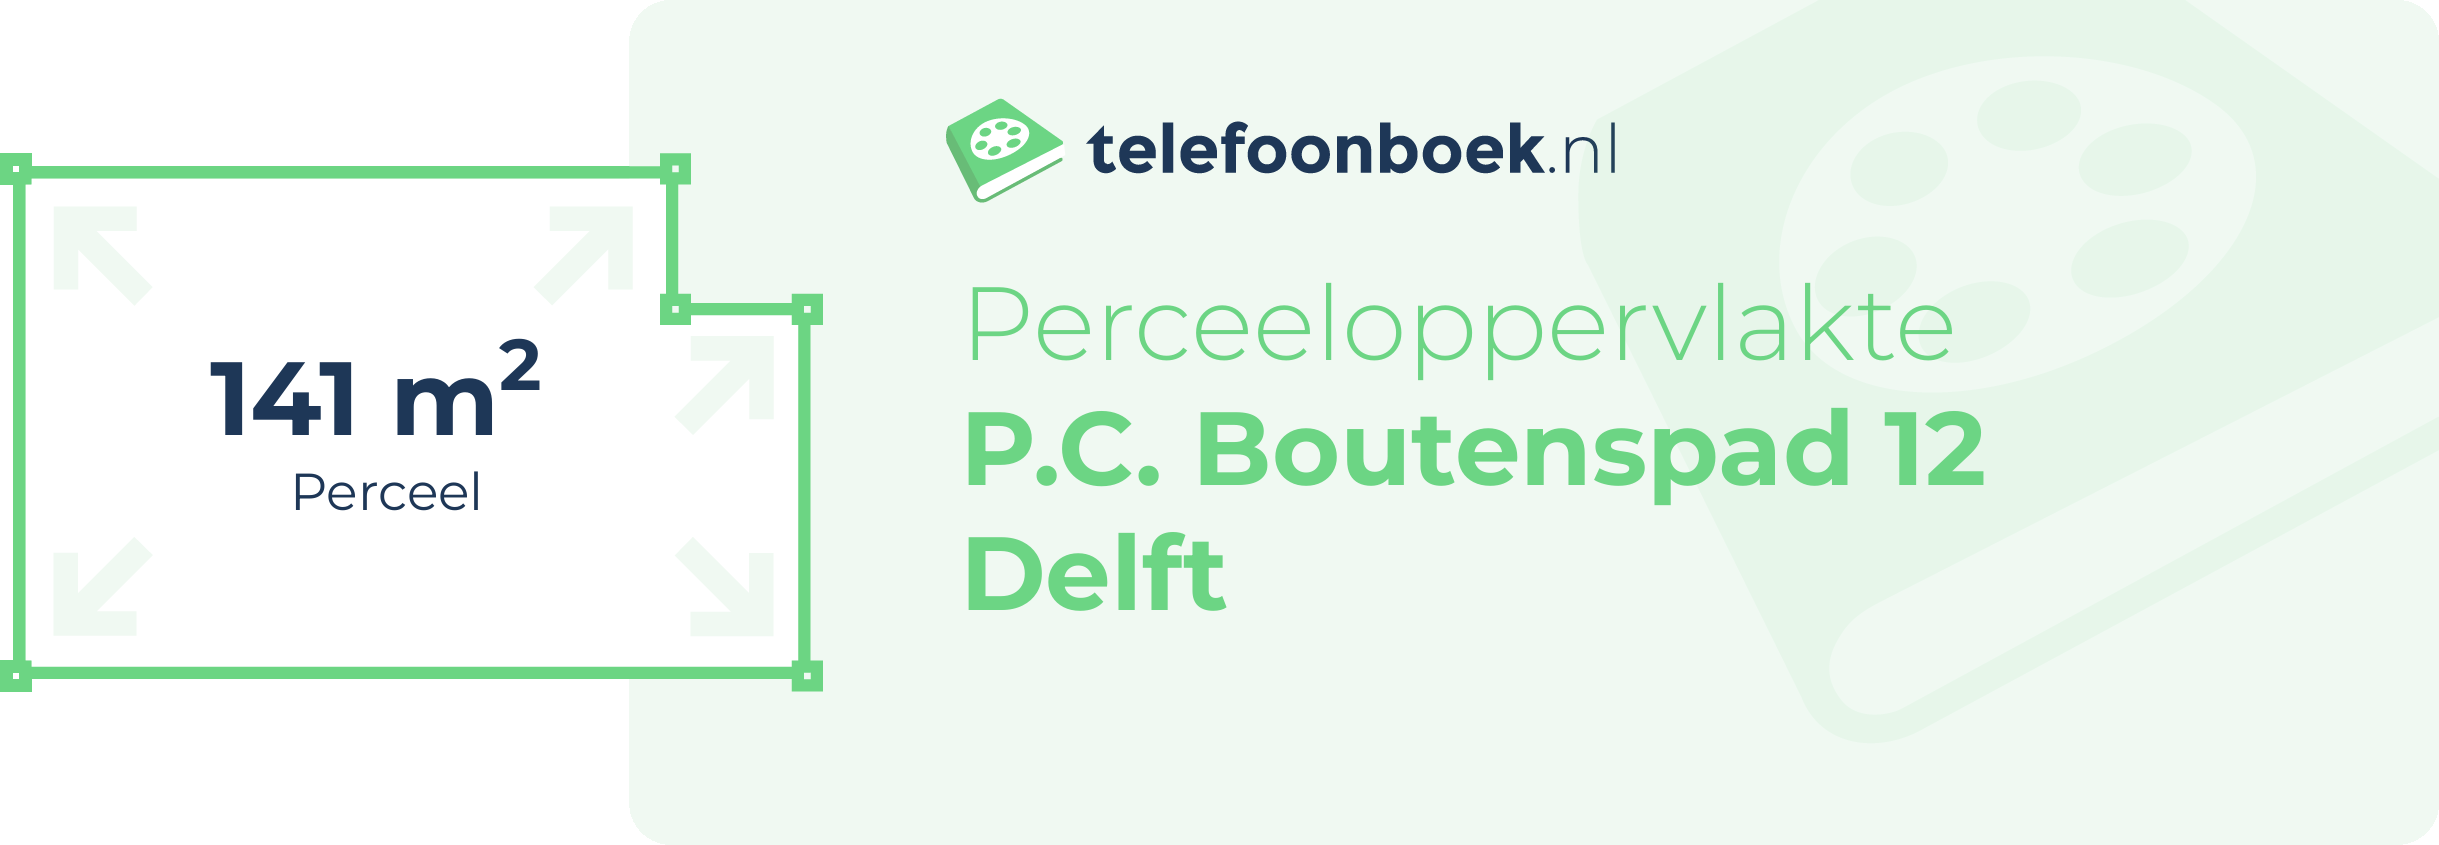 Perceeloppervlakte P.C. Boutenspad 12 Delft